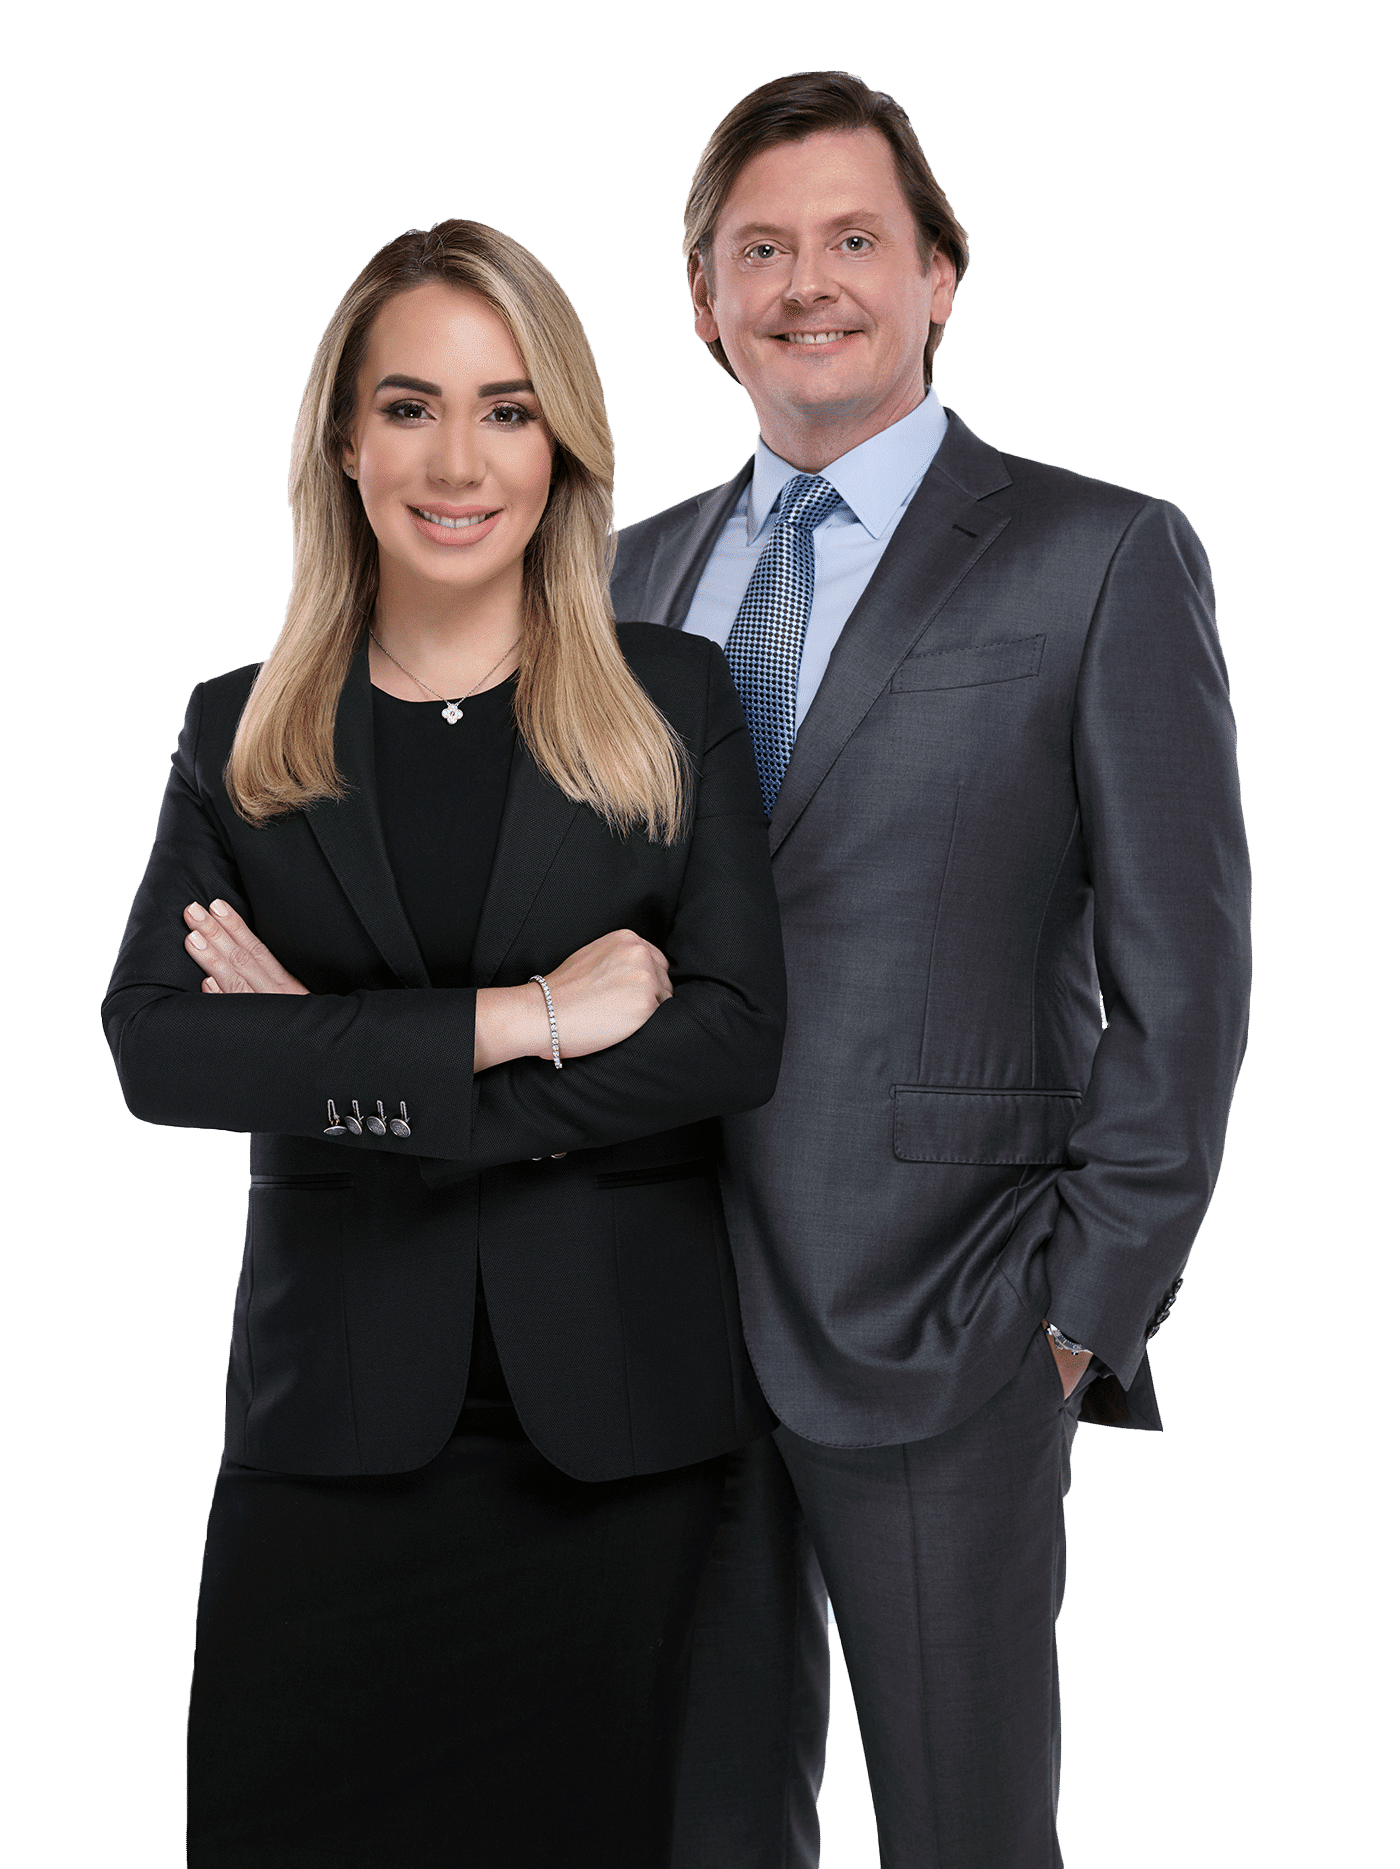 Miami personal injury lawyers Gregory Ward and Jany Martinez-Ward